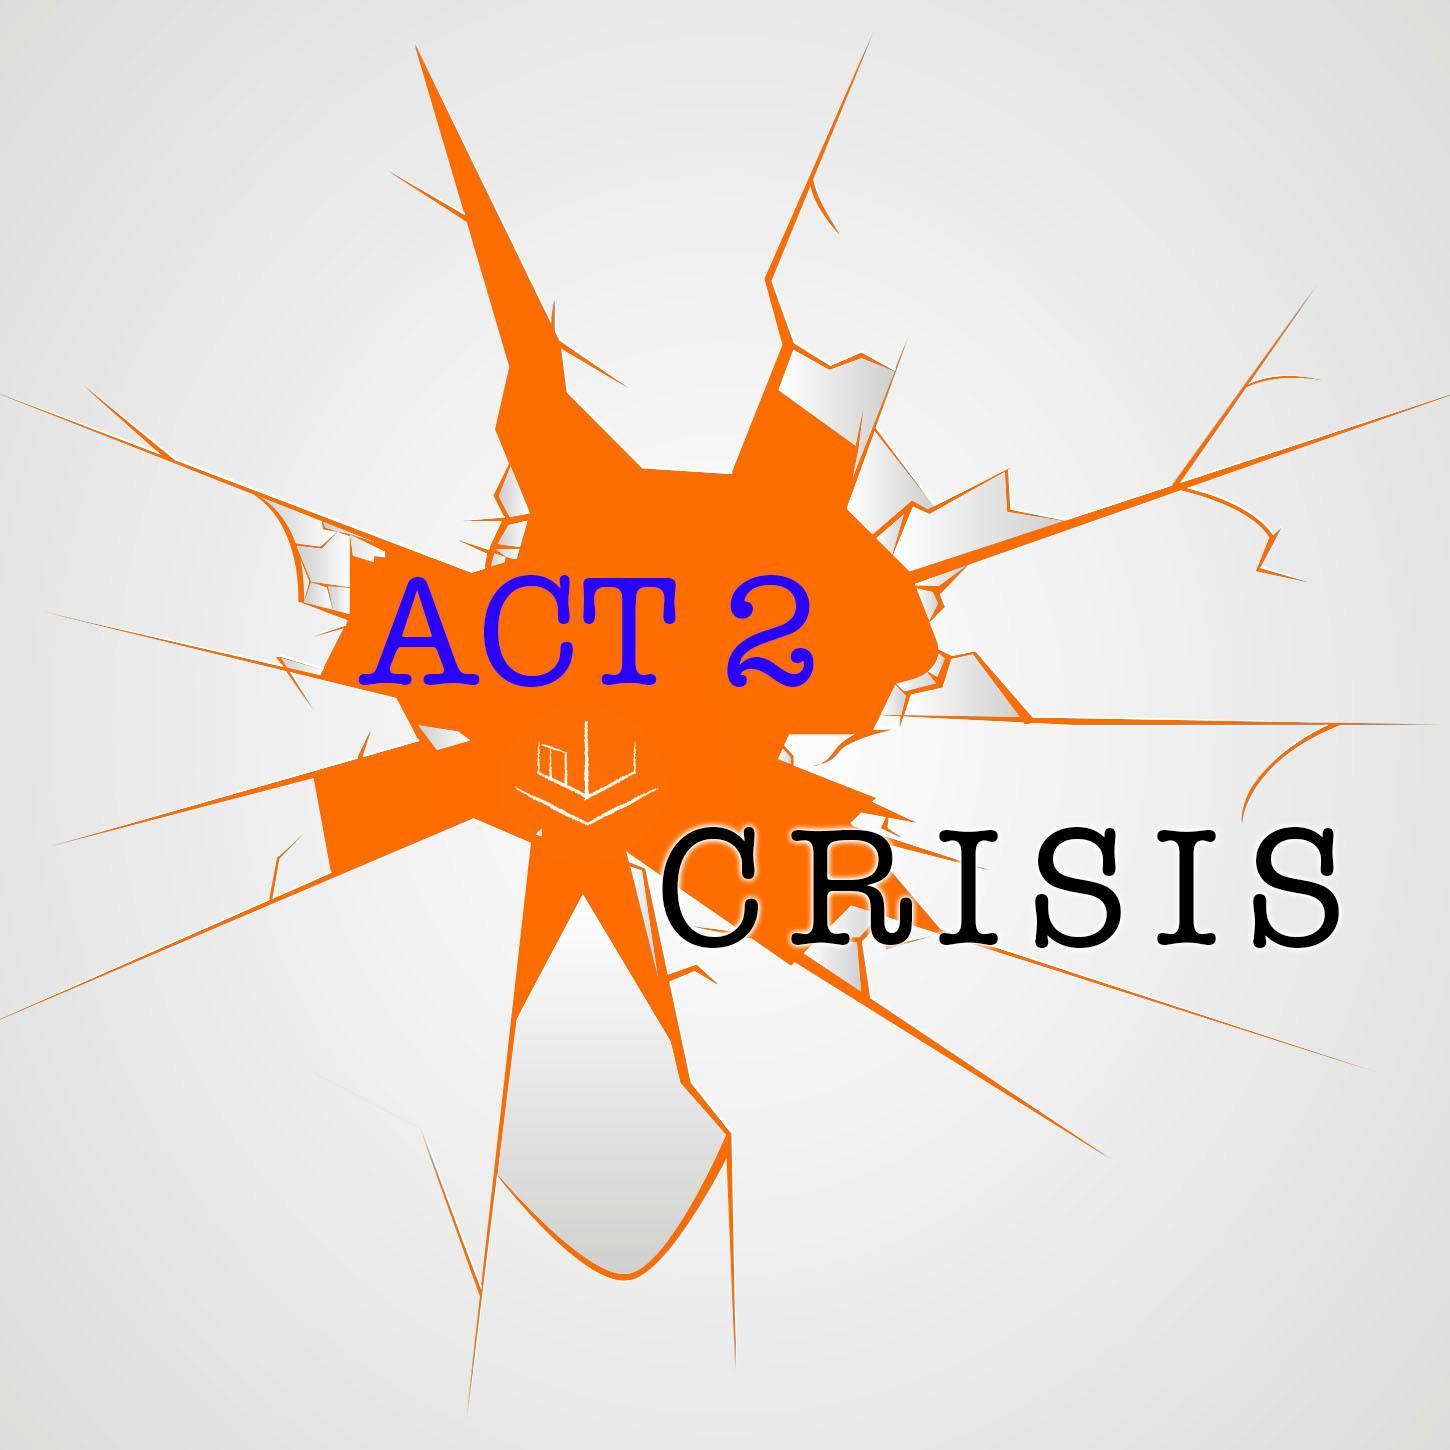 Lesson 23: Act 2 - Crisis